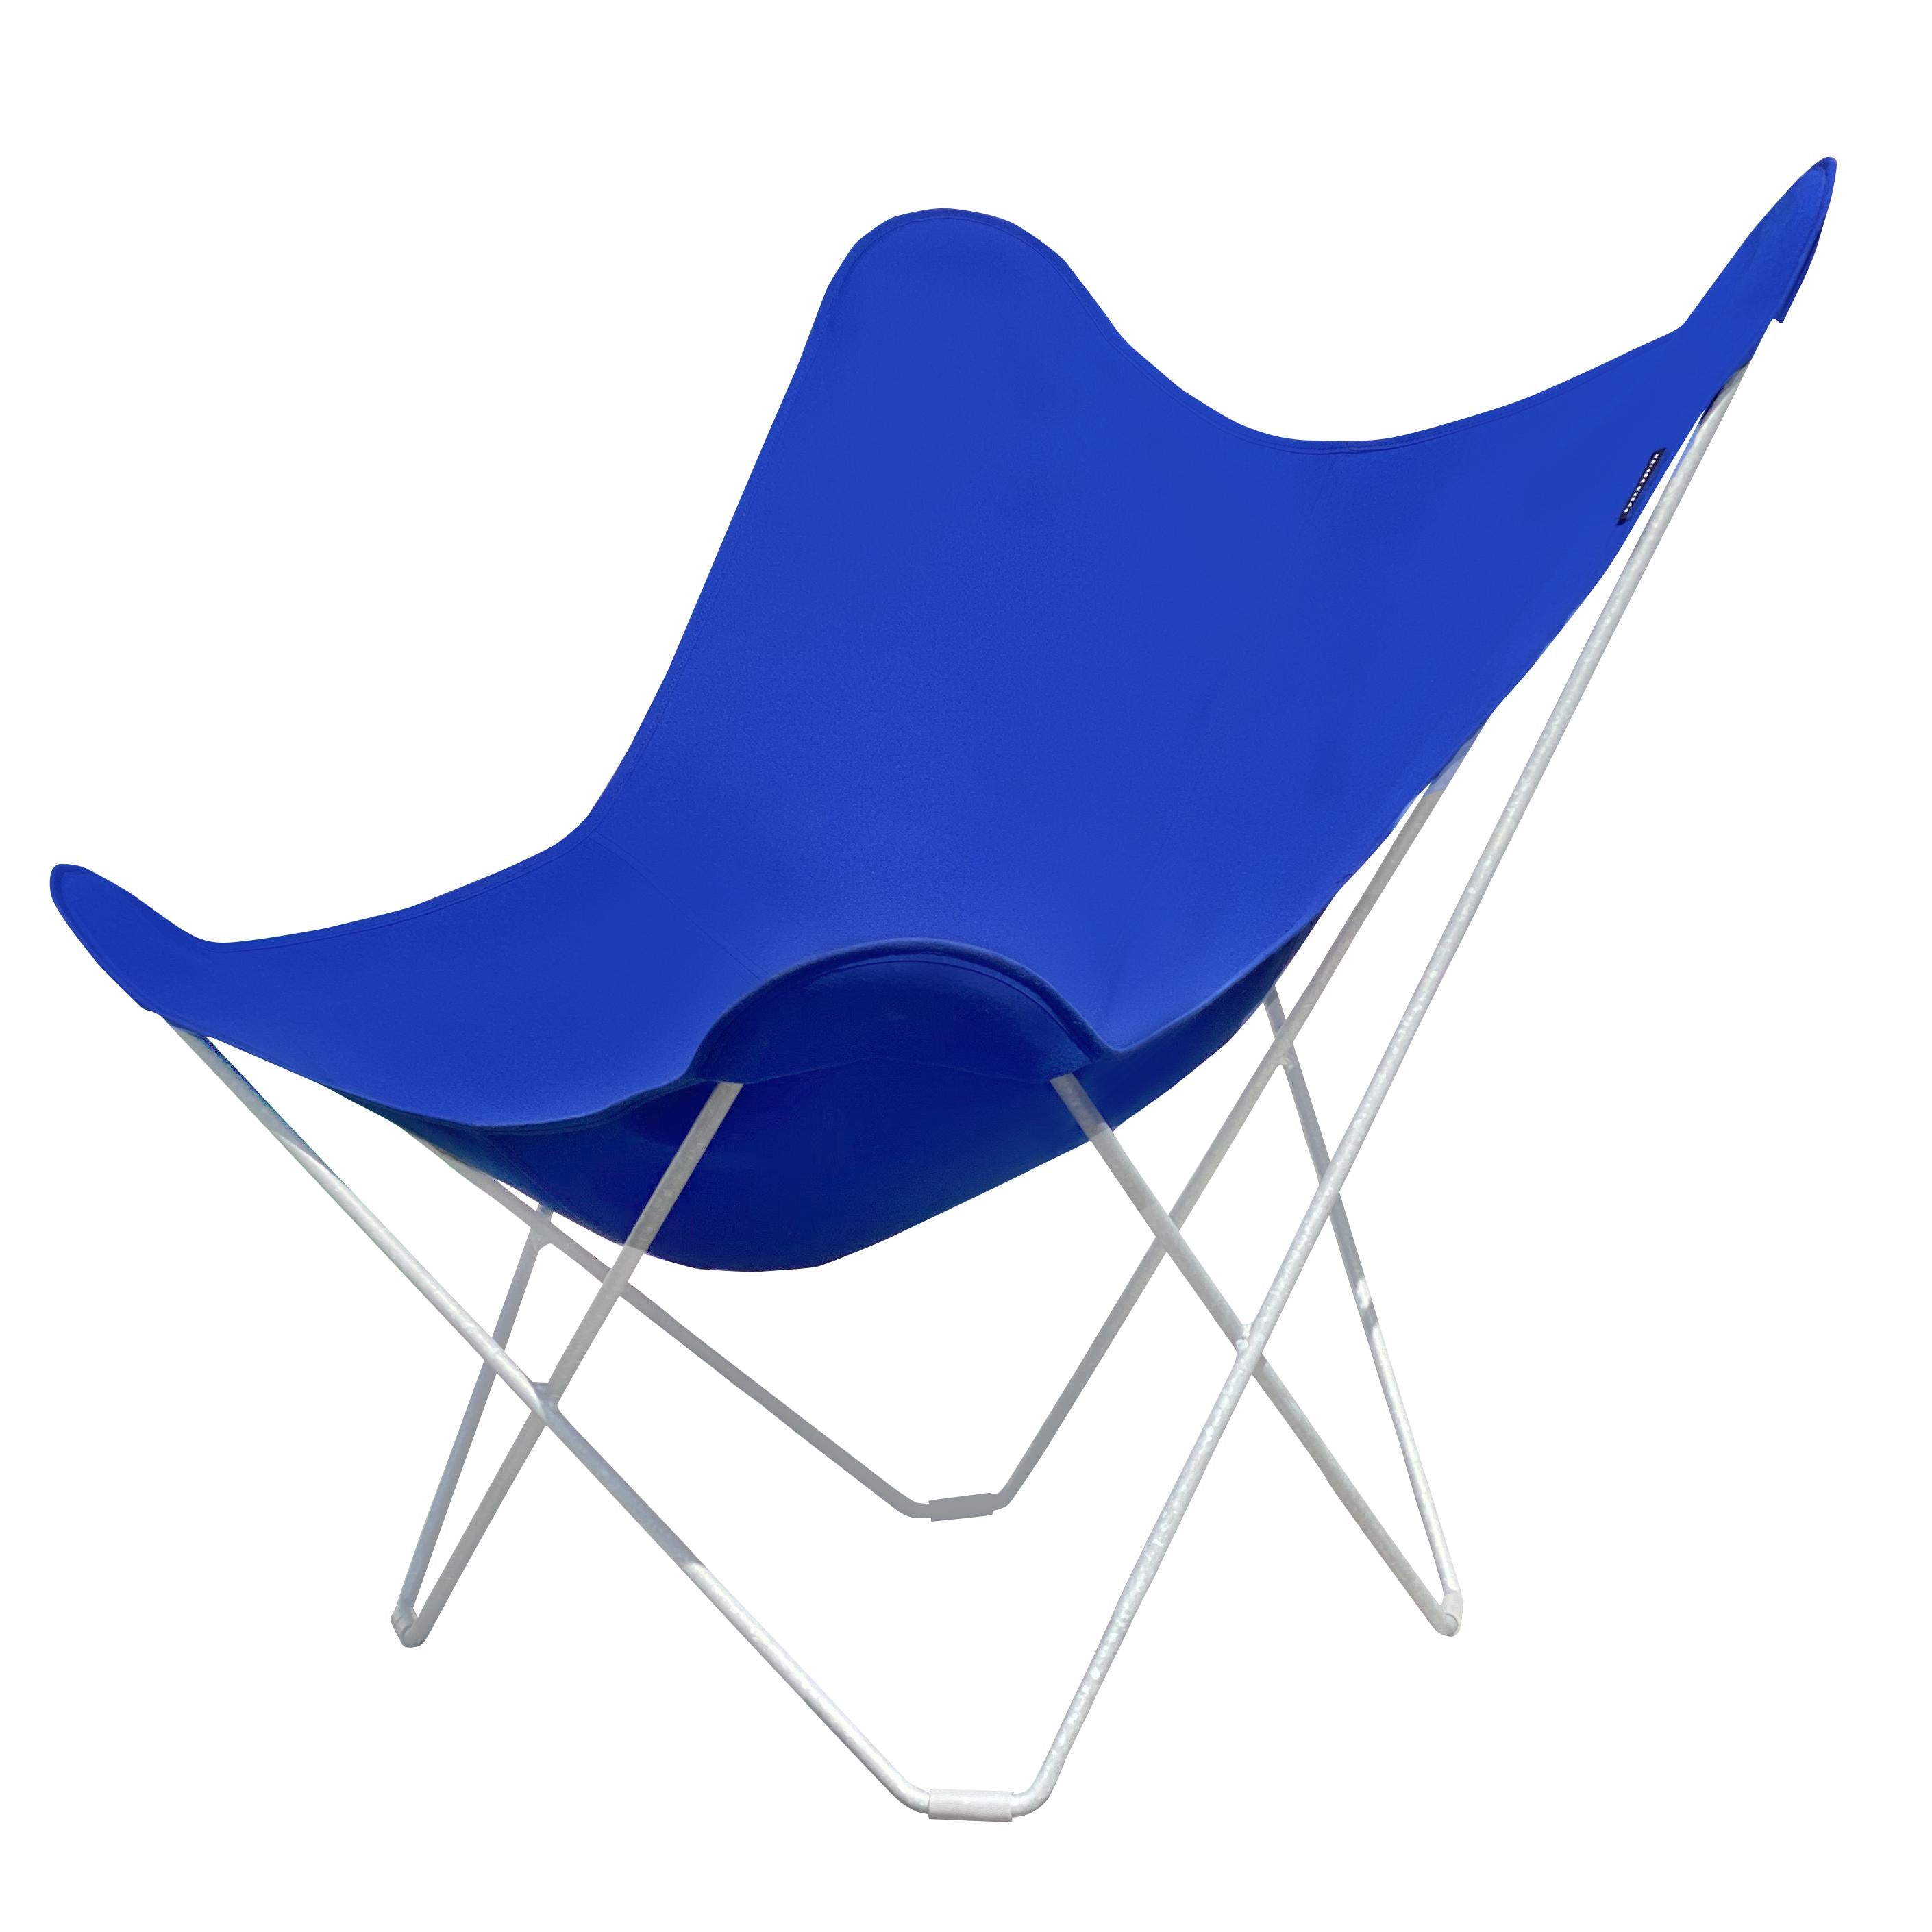 Cuero Sunshine Mariposa Butterfly Chair, Atlantic Blue/Black Galvanised